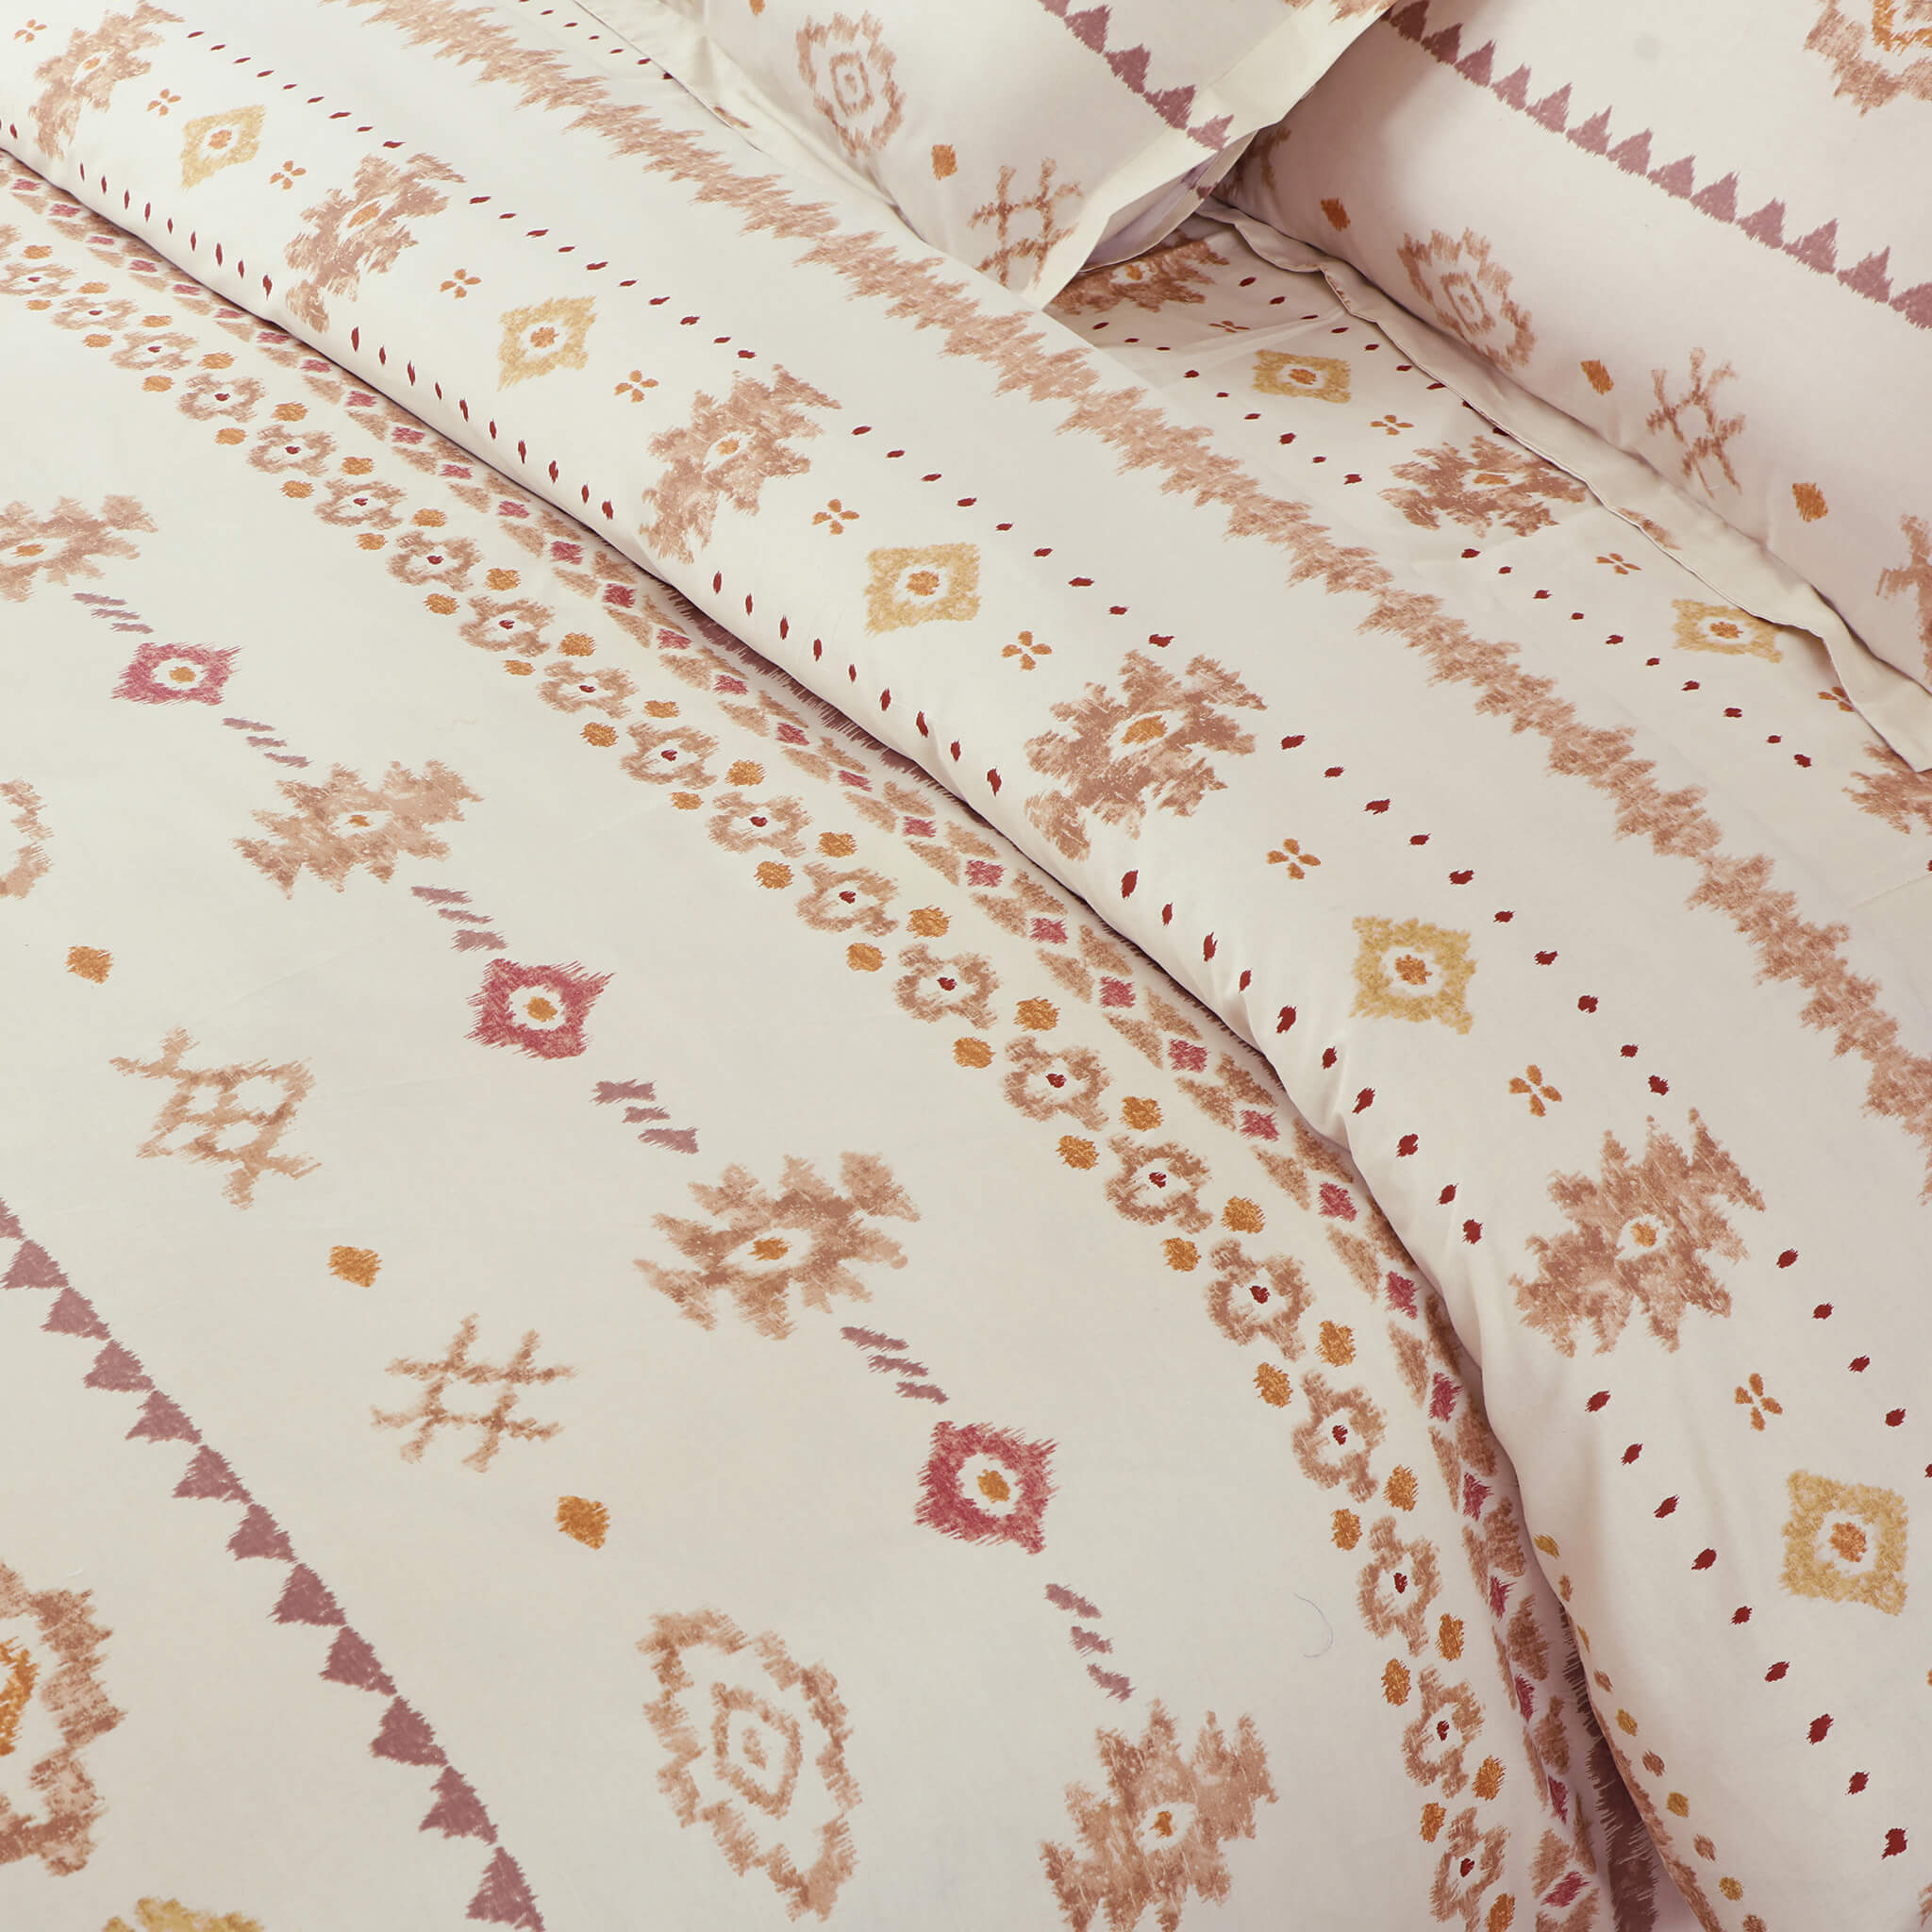 Malako Royale XL Off-White Abstract 100% Cotton King Size 6 Piece Comforter Set - MALAKO